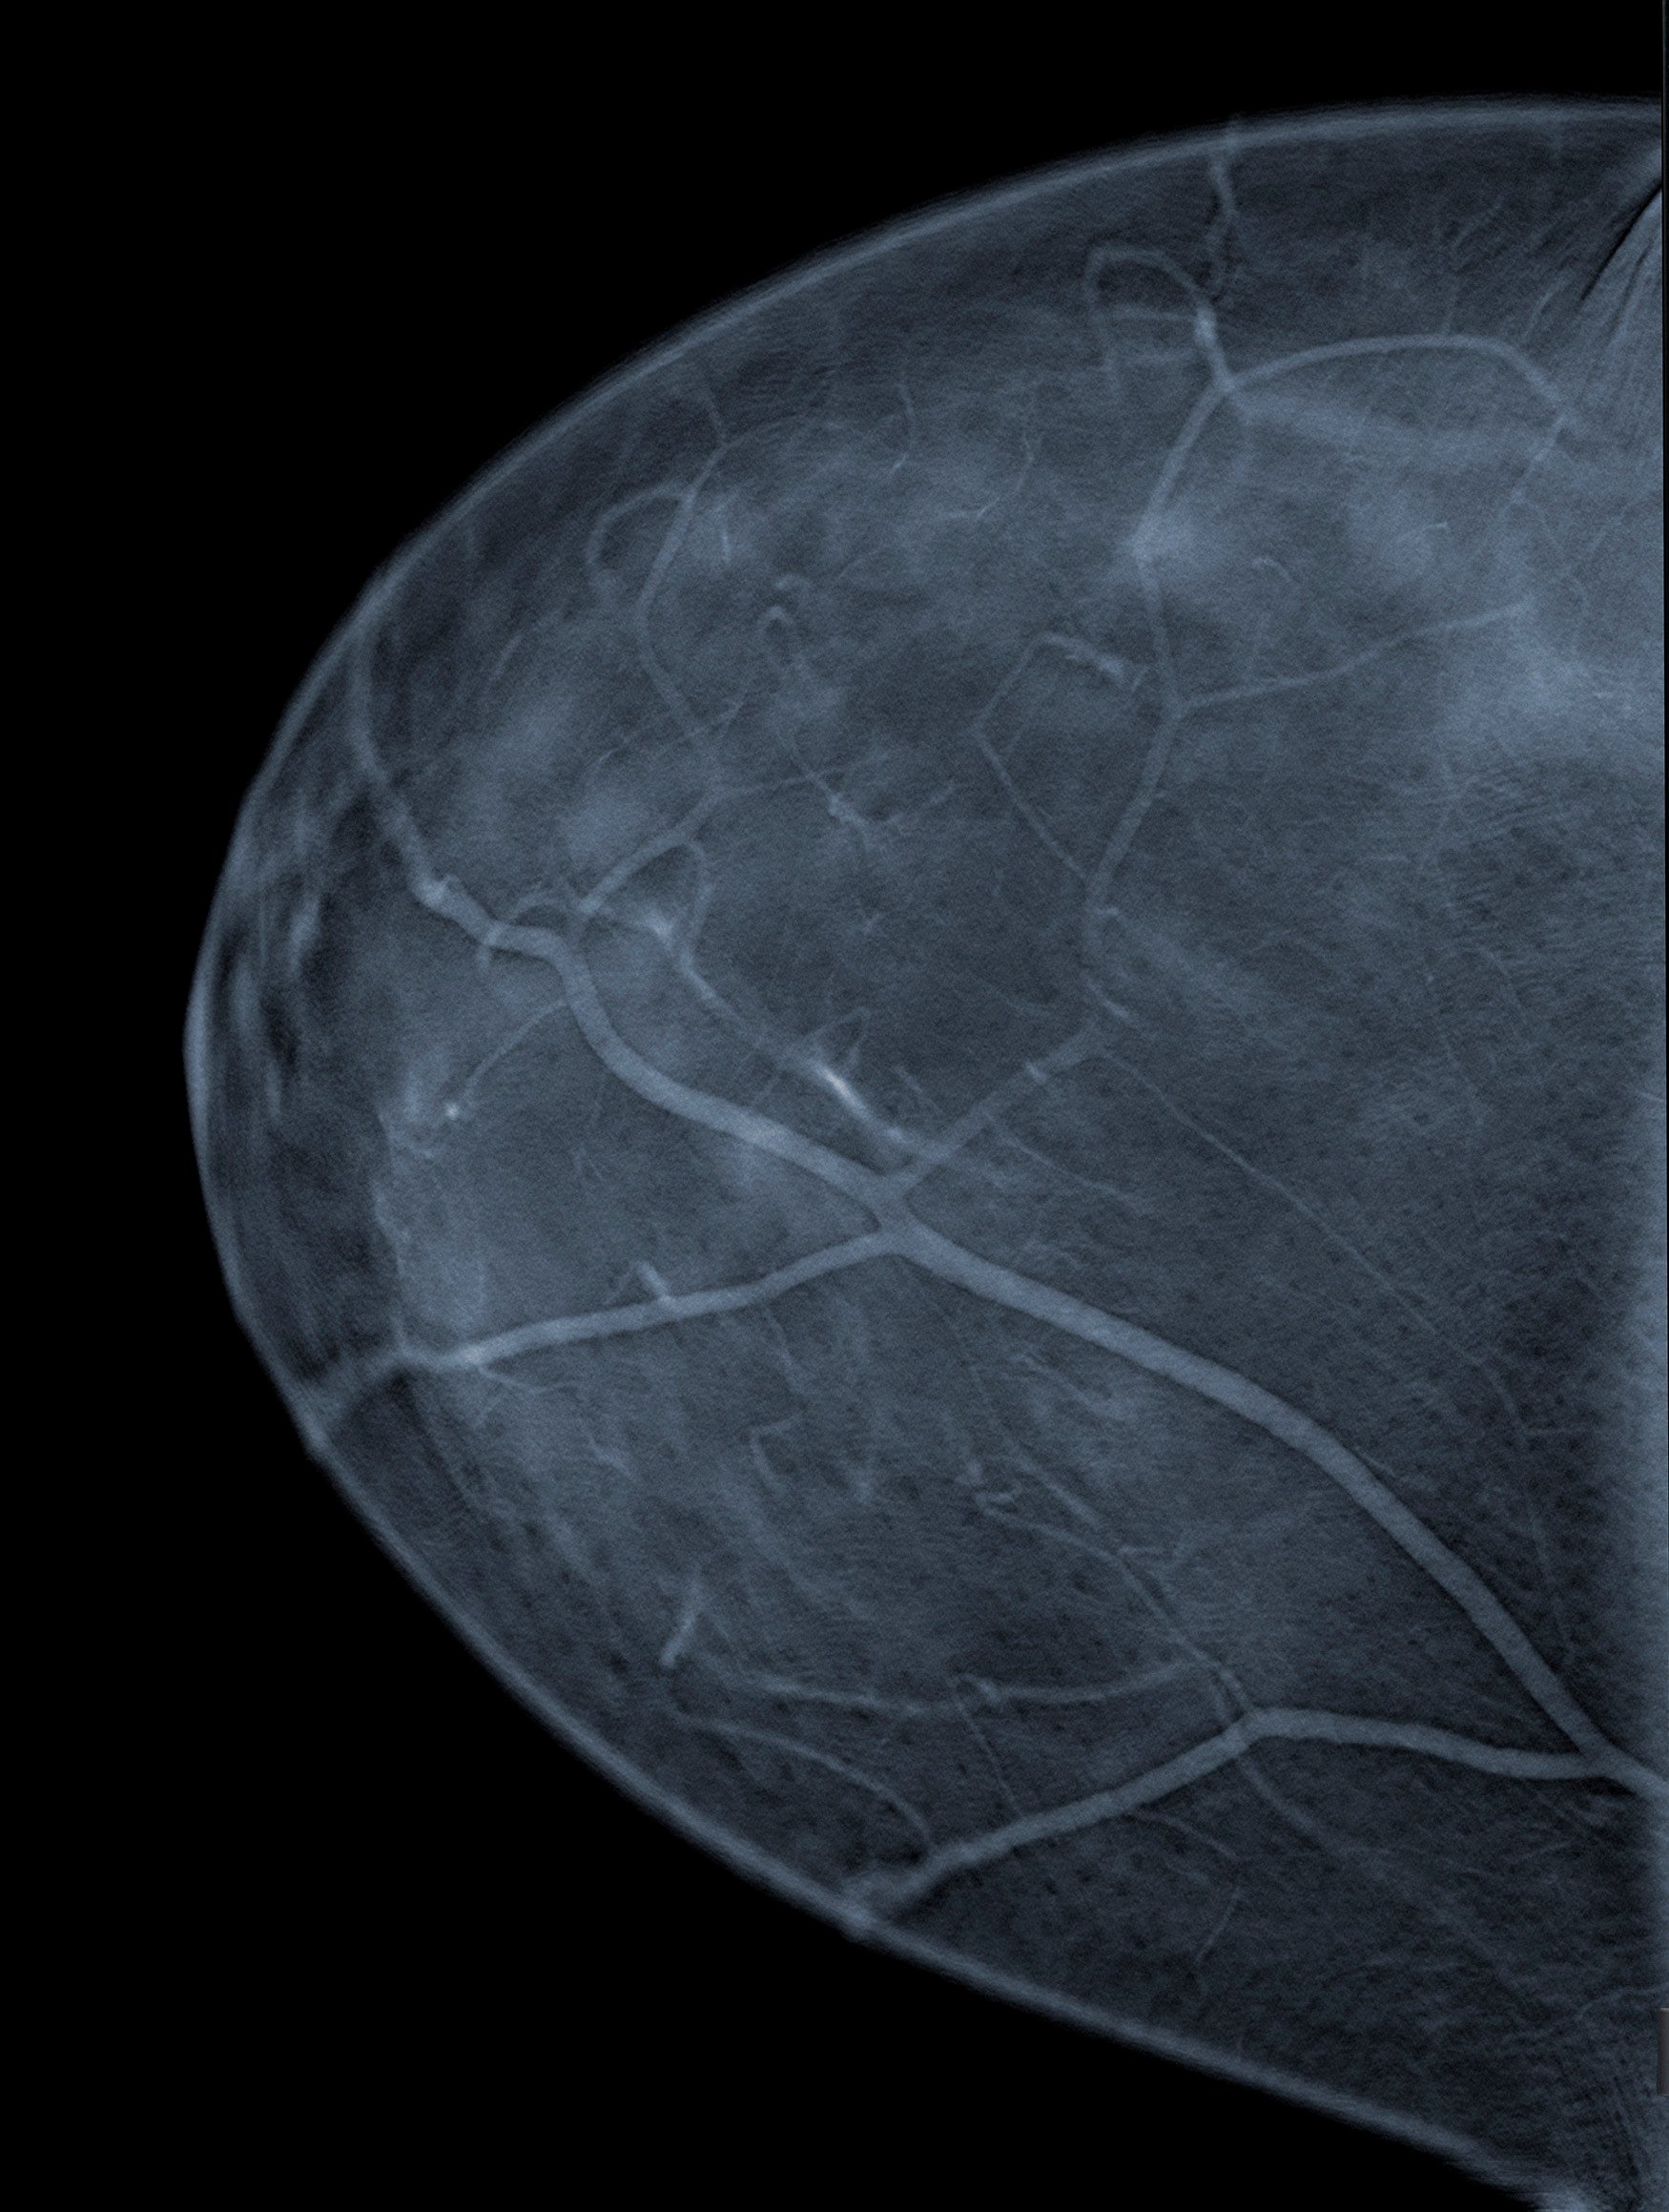 FDA MQSA Mammography Full-Field Digital FFDM Women's Health 